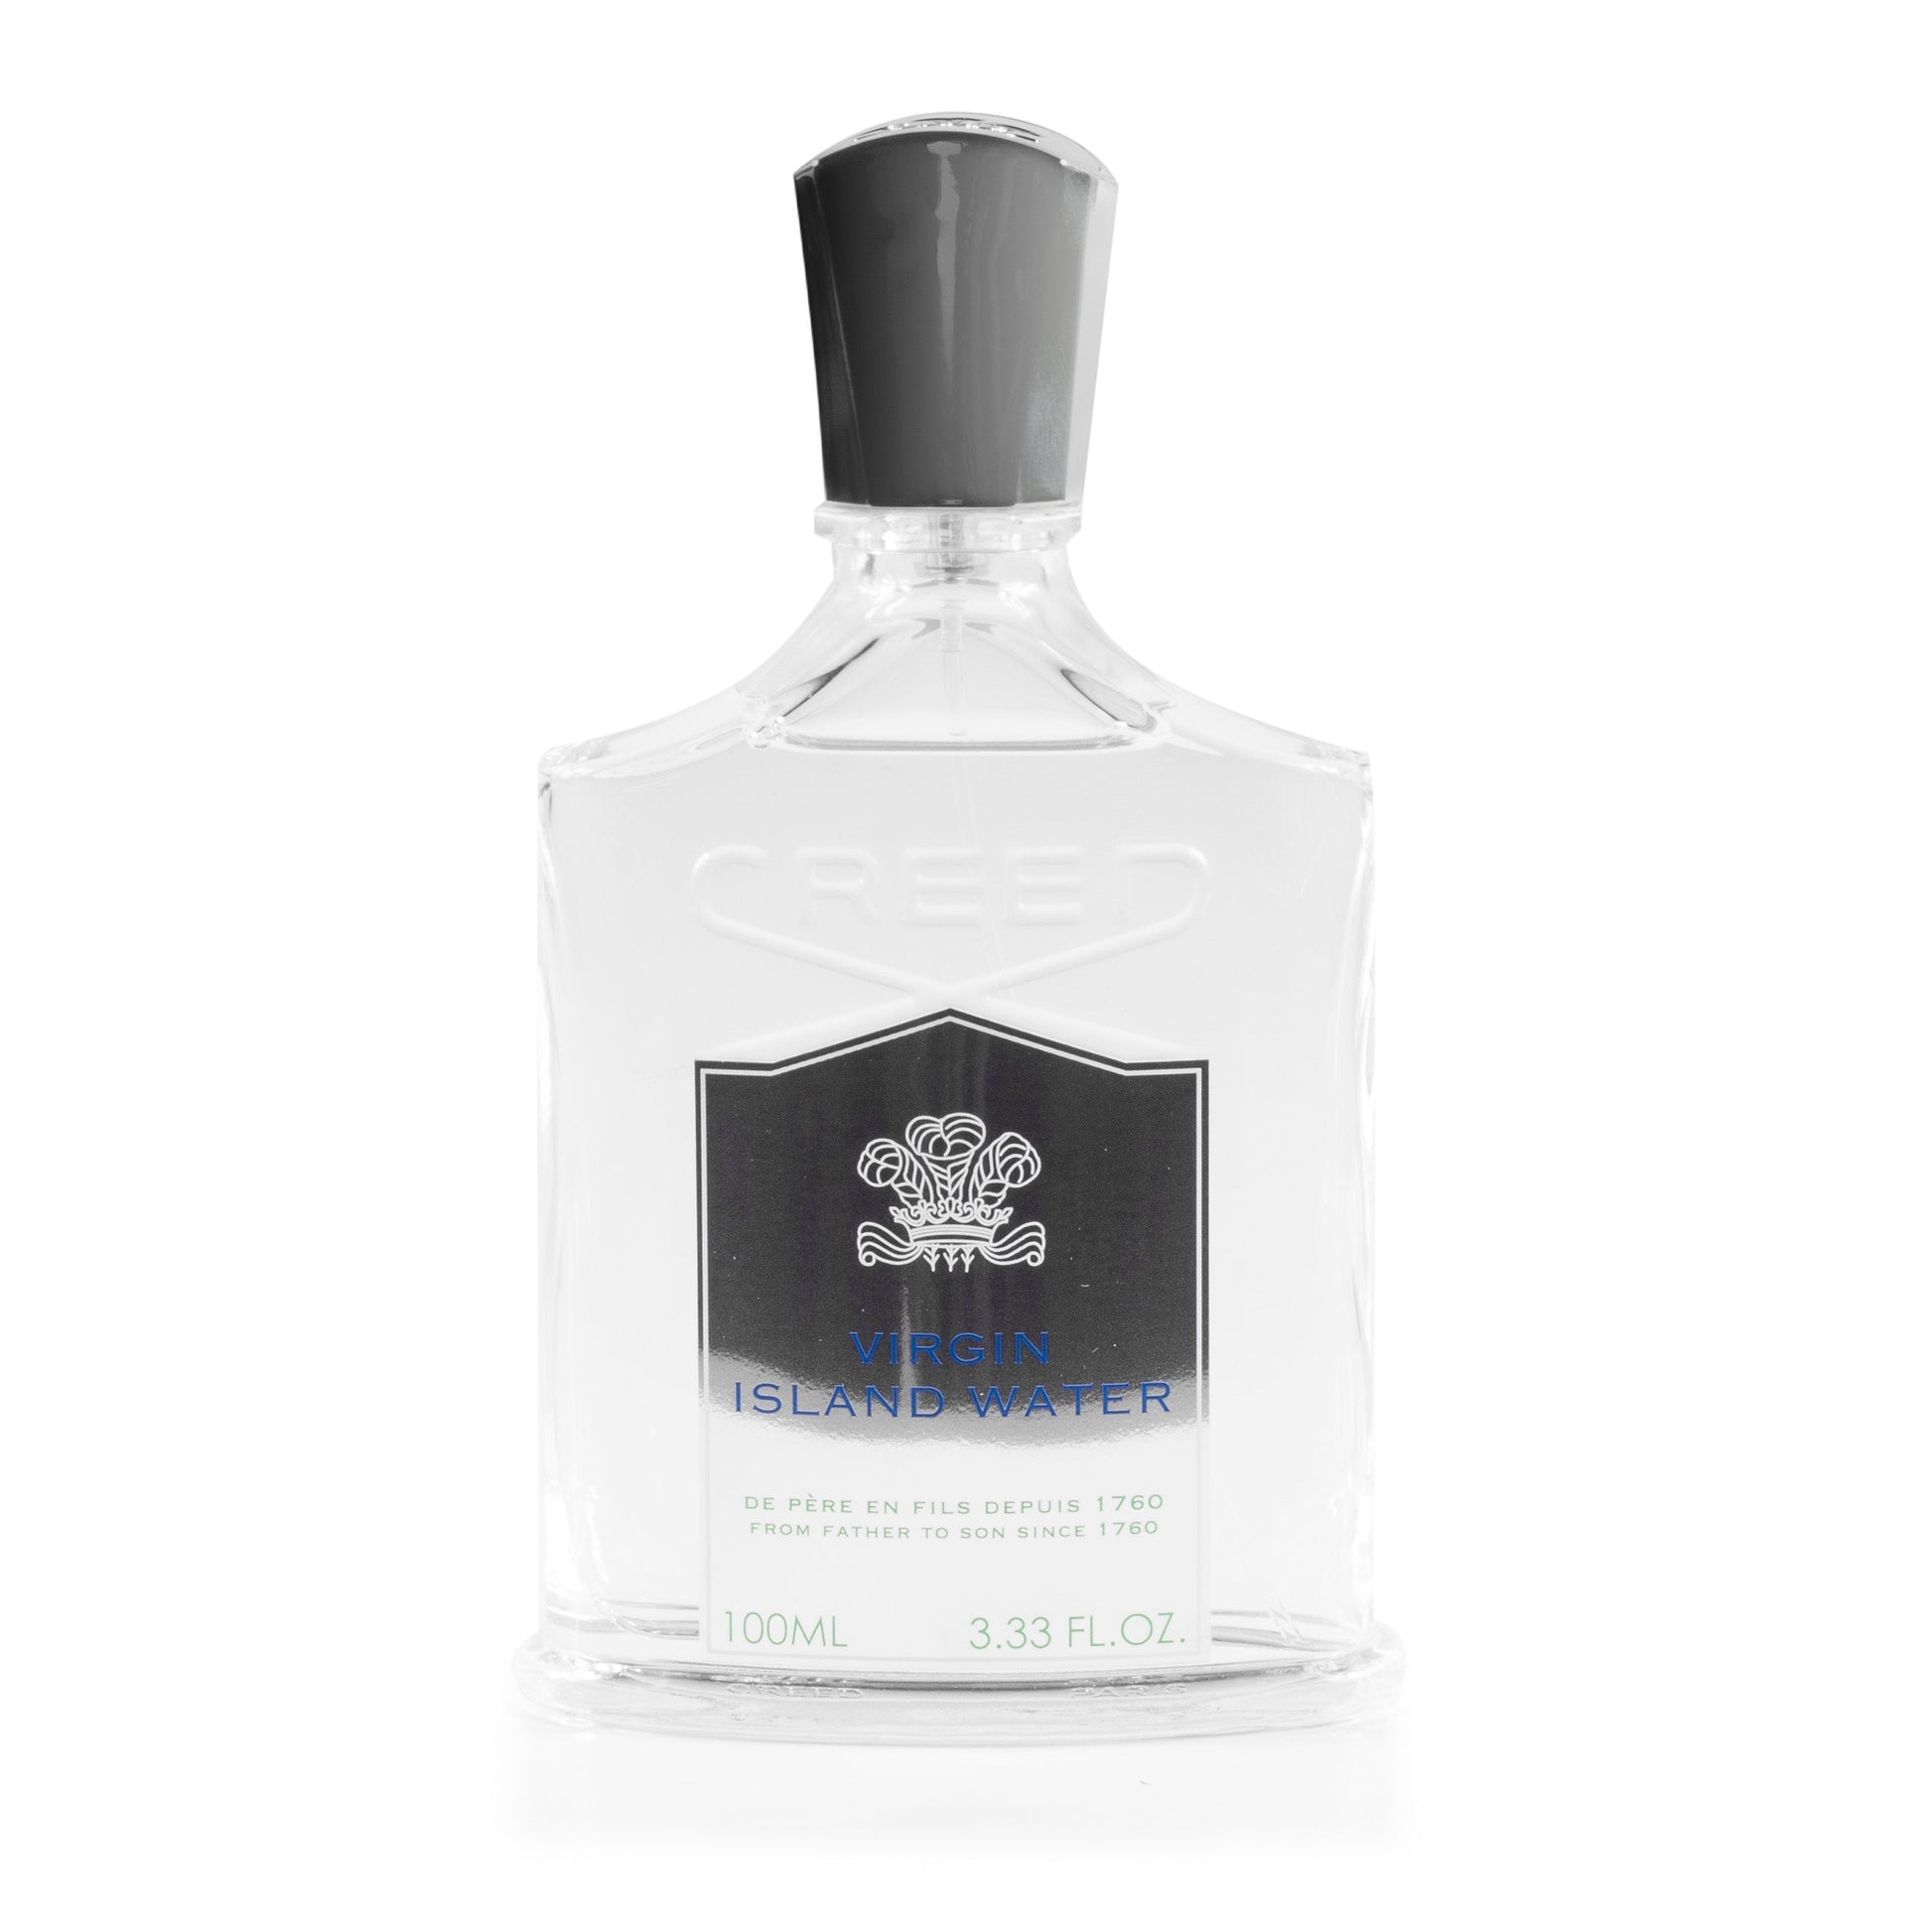 Virgin Island Water Eau de Parfum Spray for Men by Creed, Product image 8